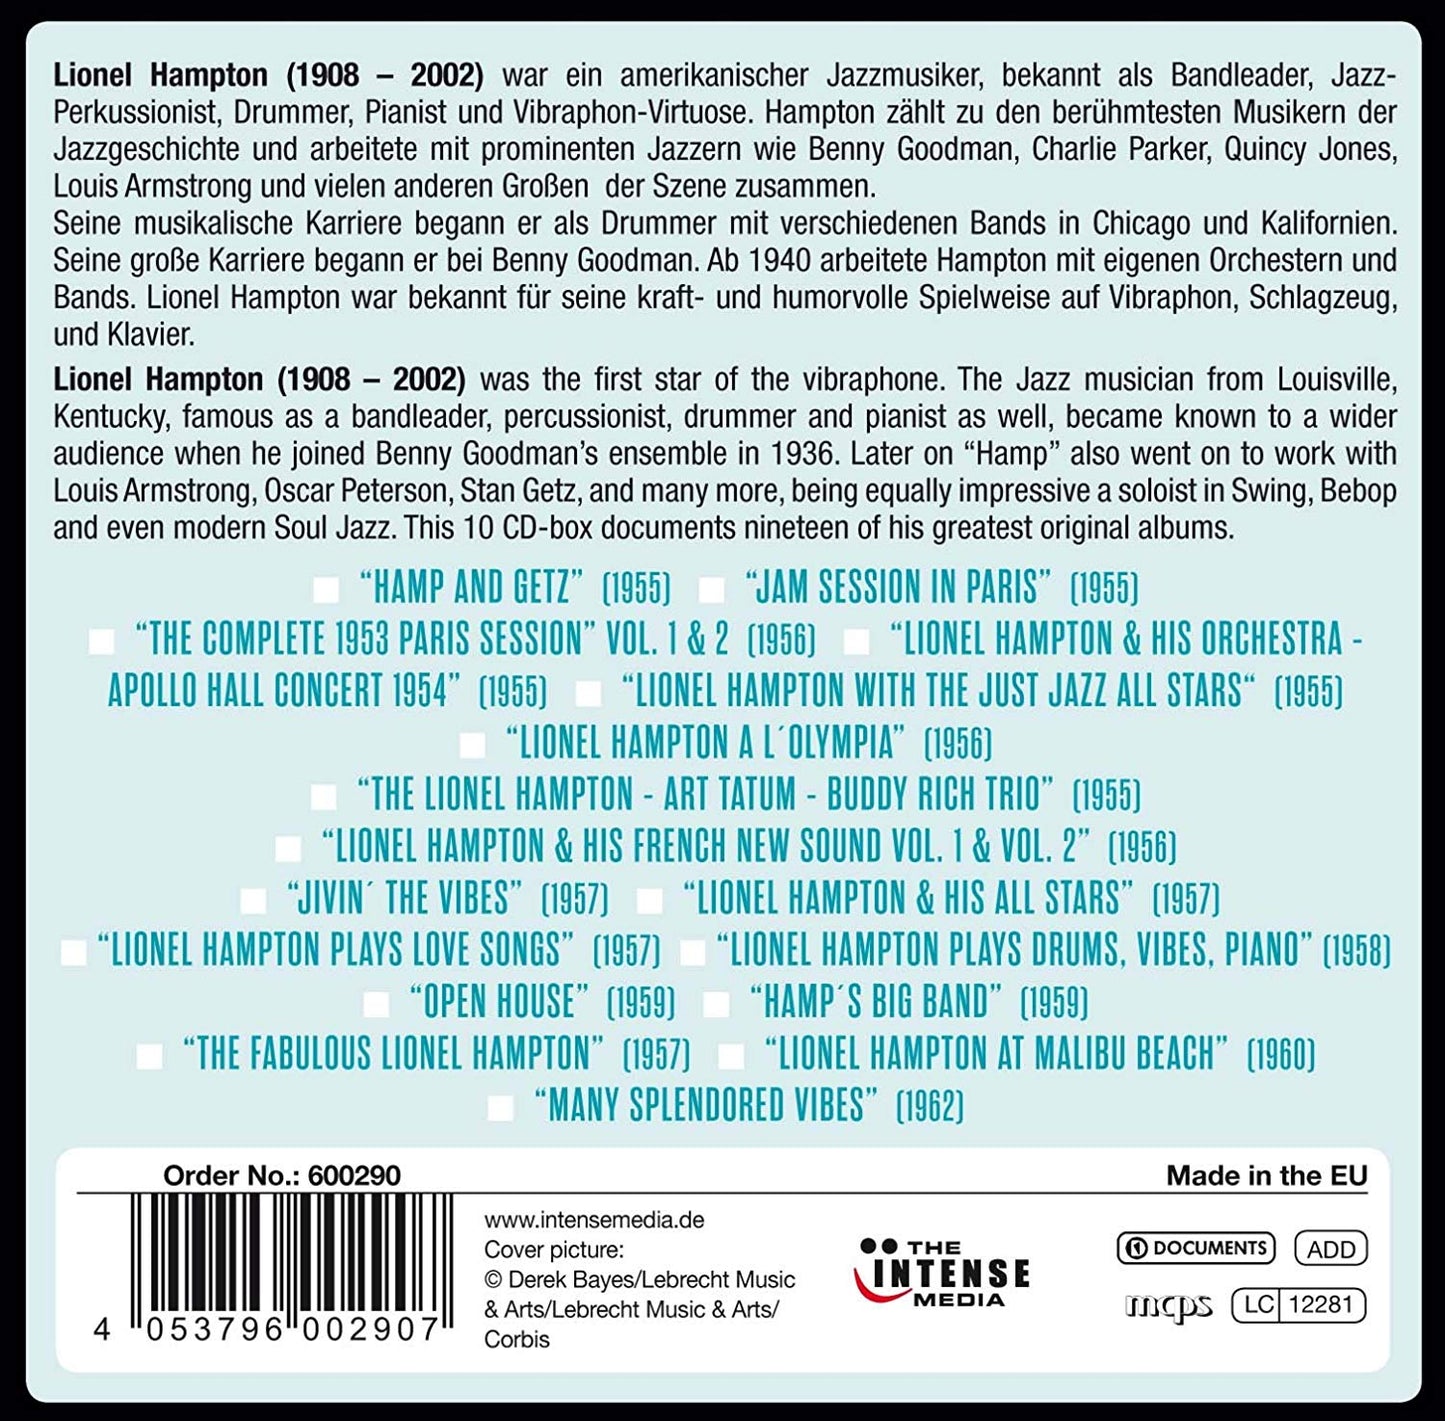 LIONEL HAMPTON - 19 ORIGINAL ALBUMS (10 CDS)